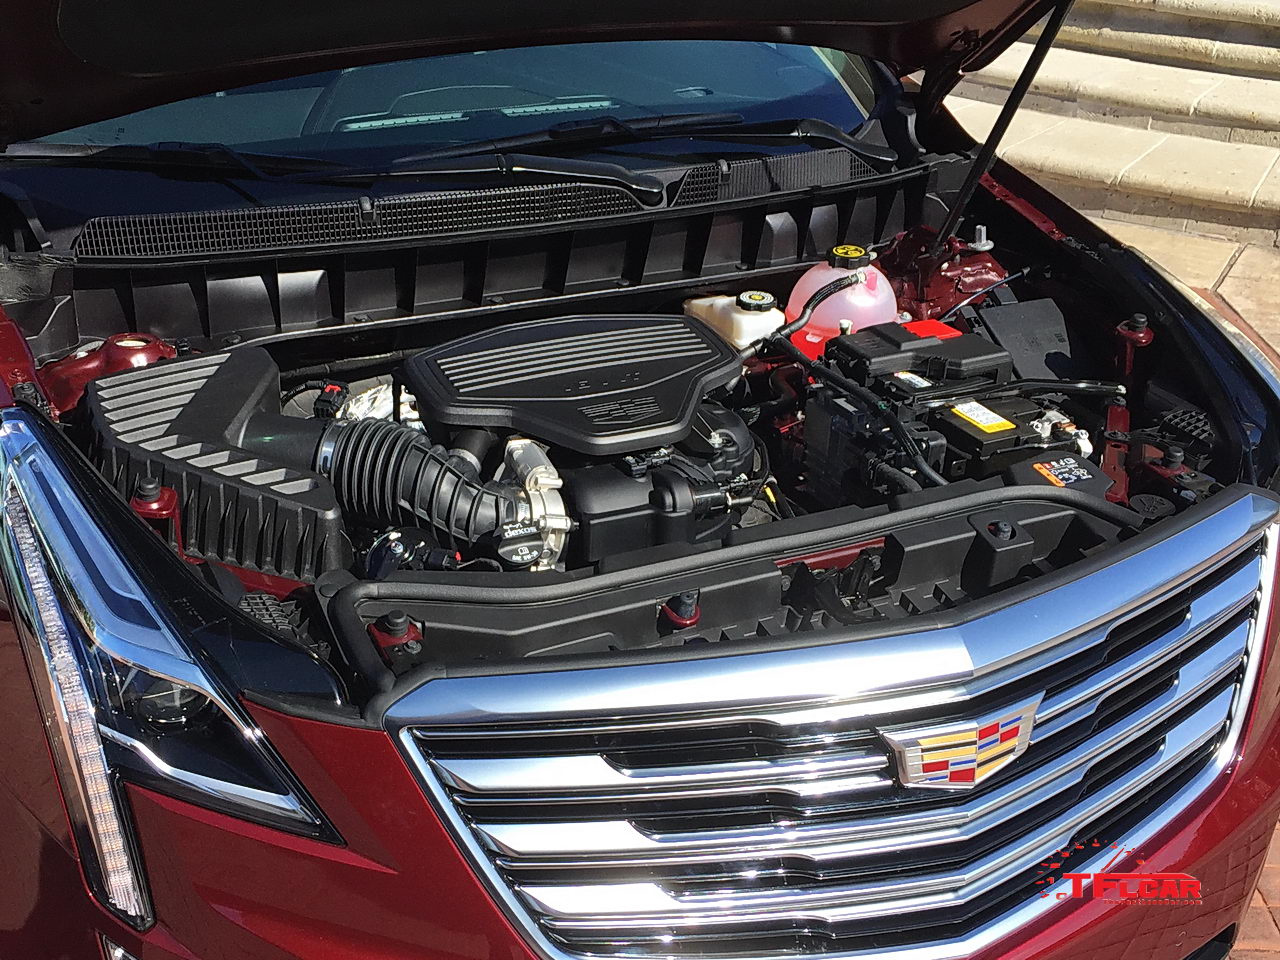 2017 Cadillac XT5 310 hp 3.6L V6 engine